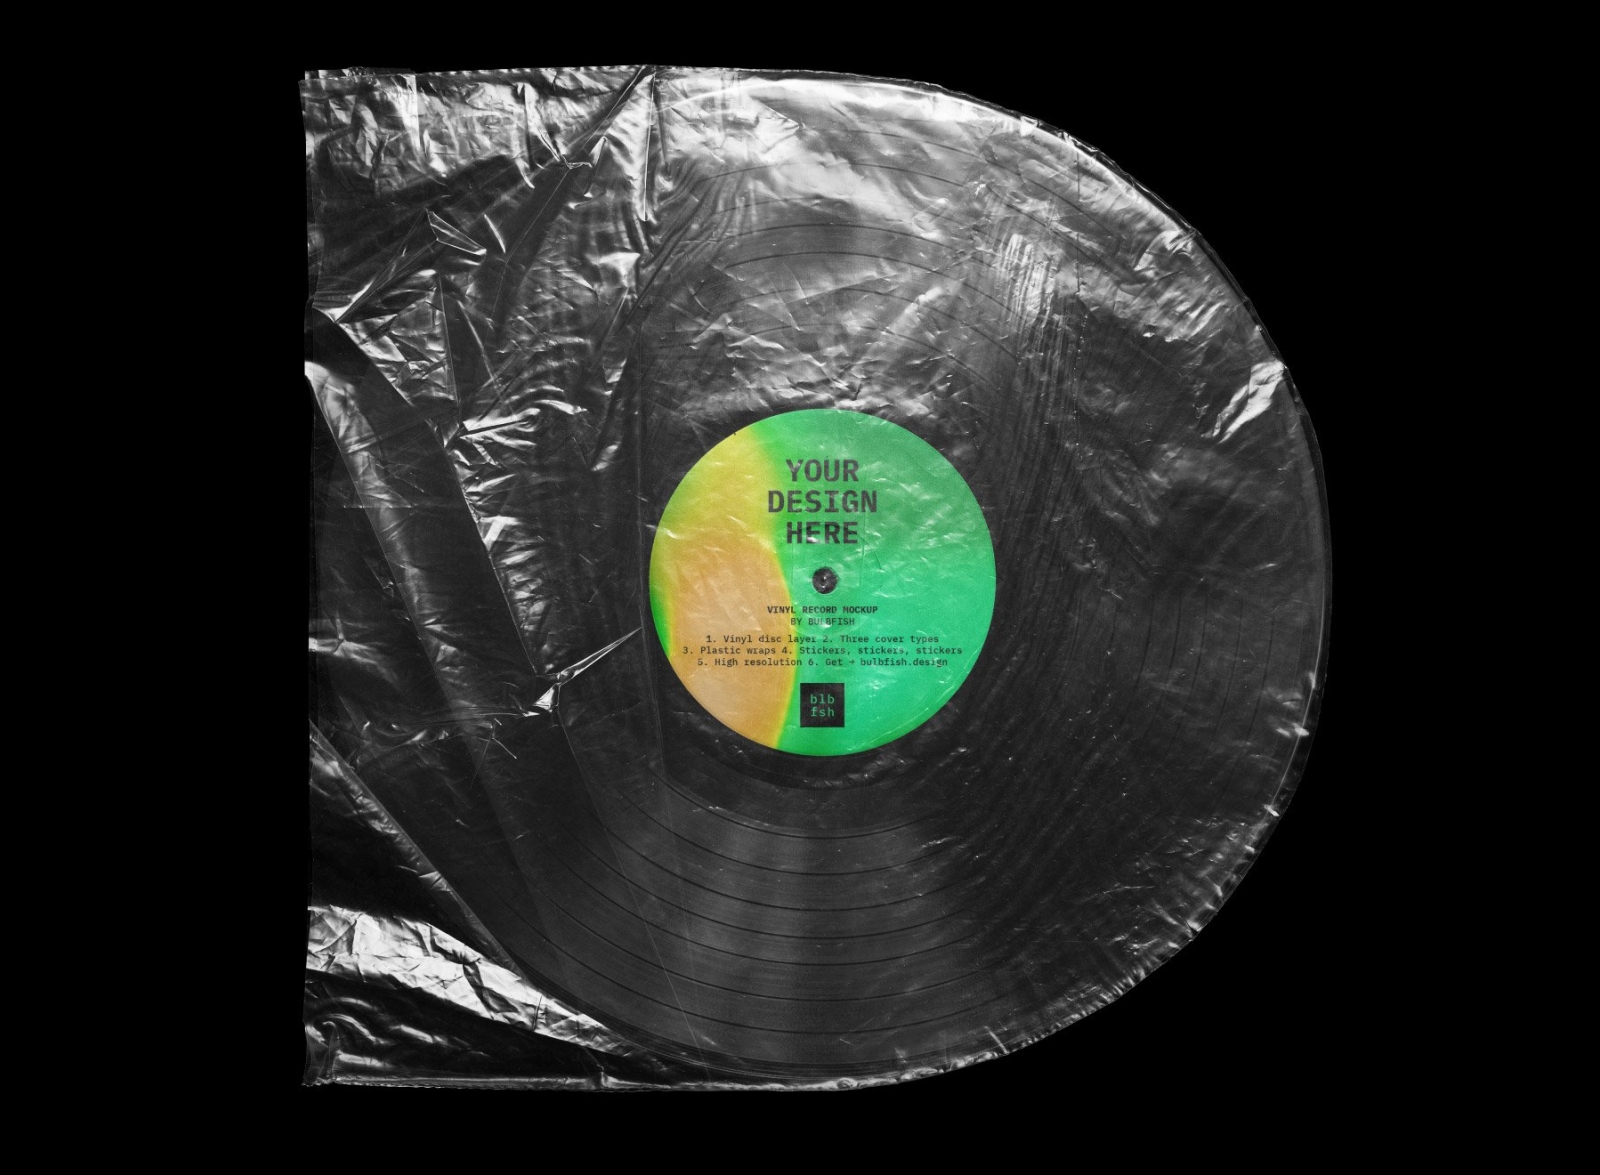 Download Vinyl Record Mockup by Mockup5 on Dribbble